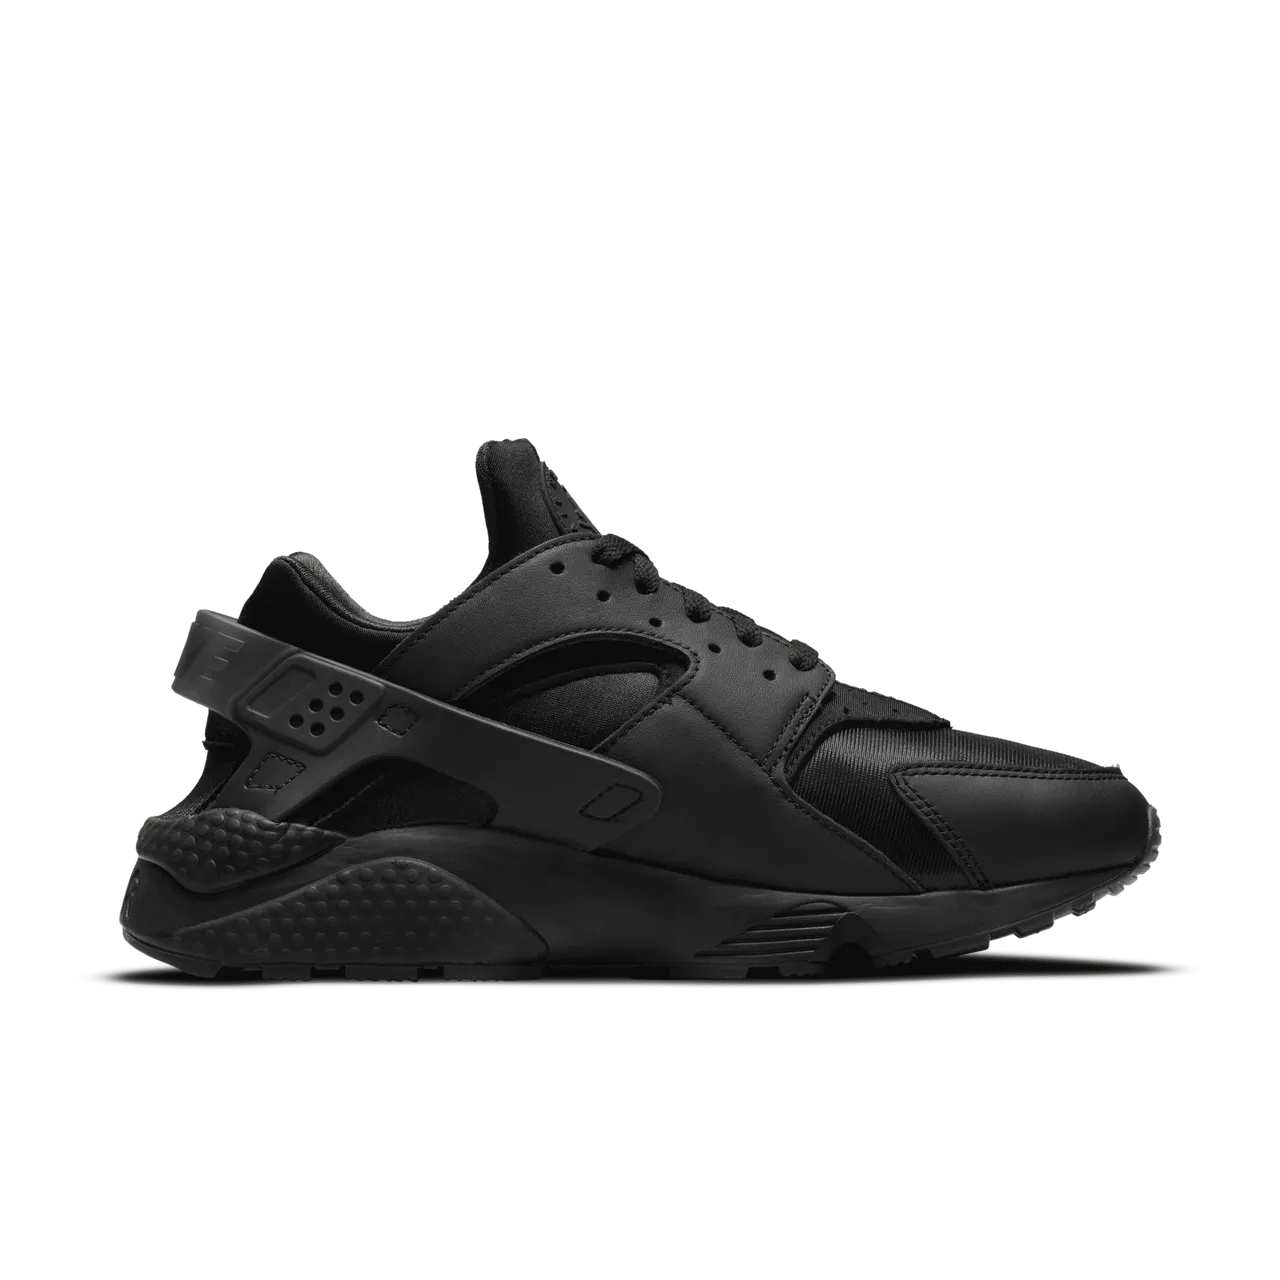 Nike Air Huarache Men's Shoes - Black - Leather